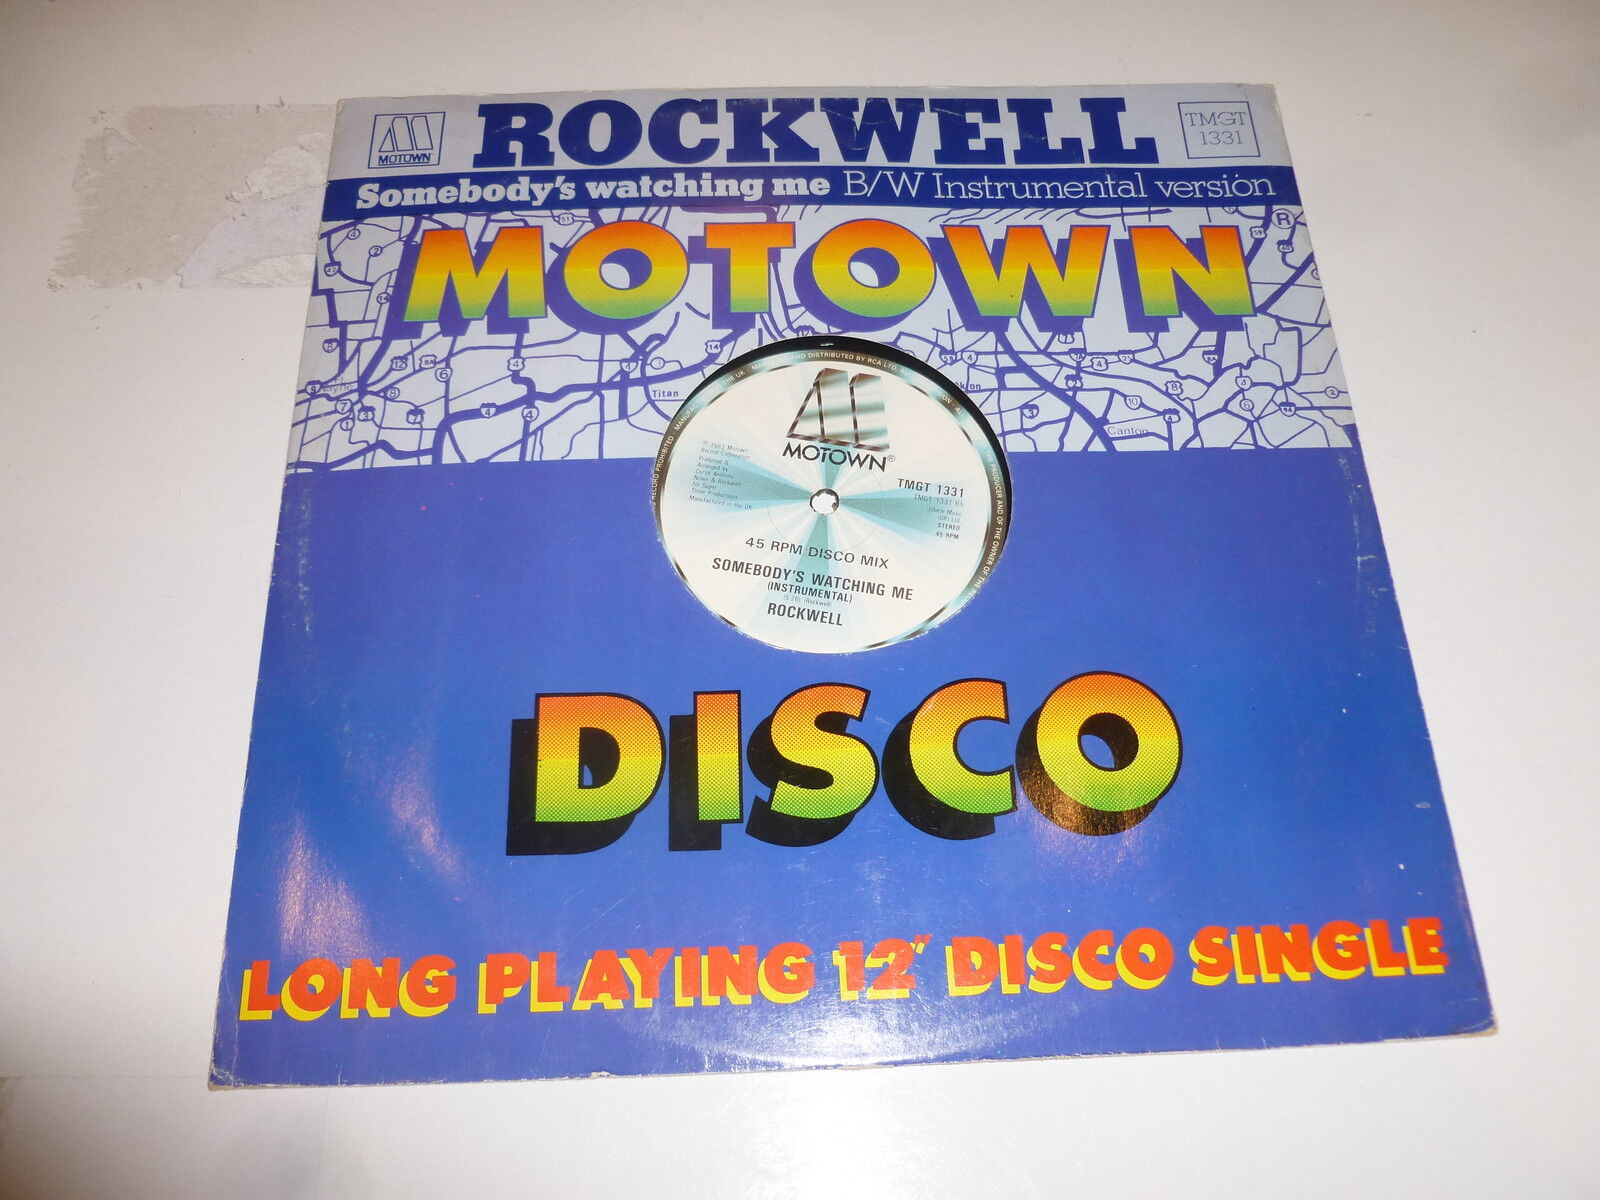 ROCKWELL - Somebody's Watching Me - 1983 UK 2-track 12" vinyl single